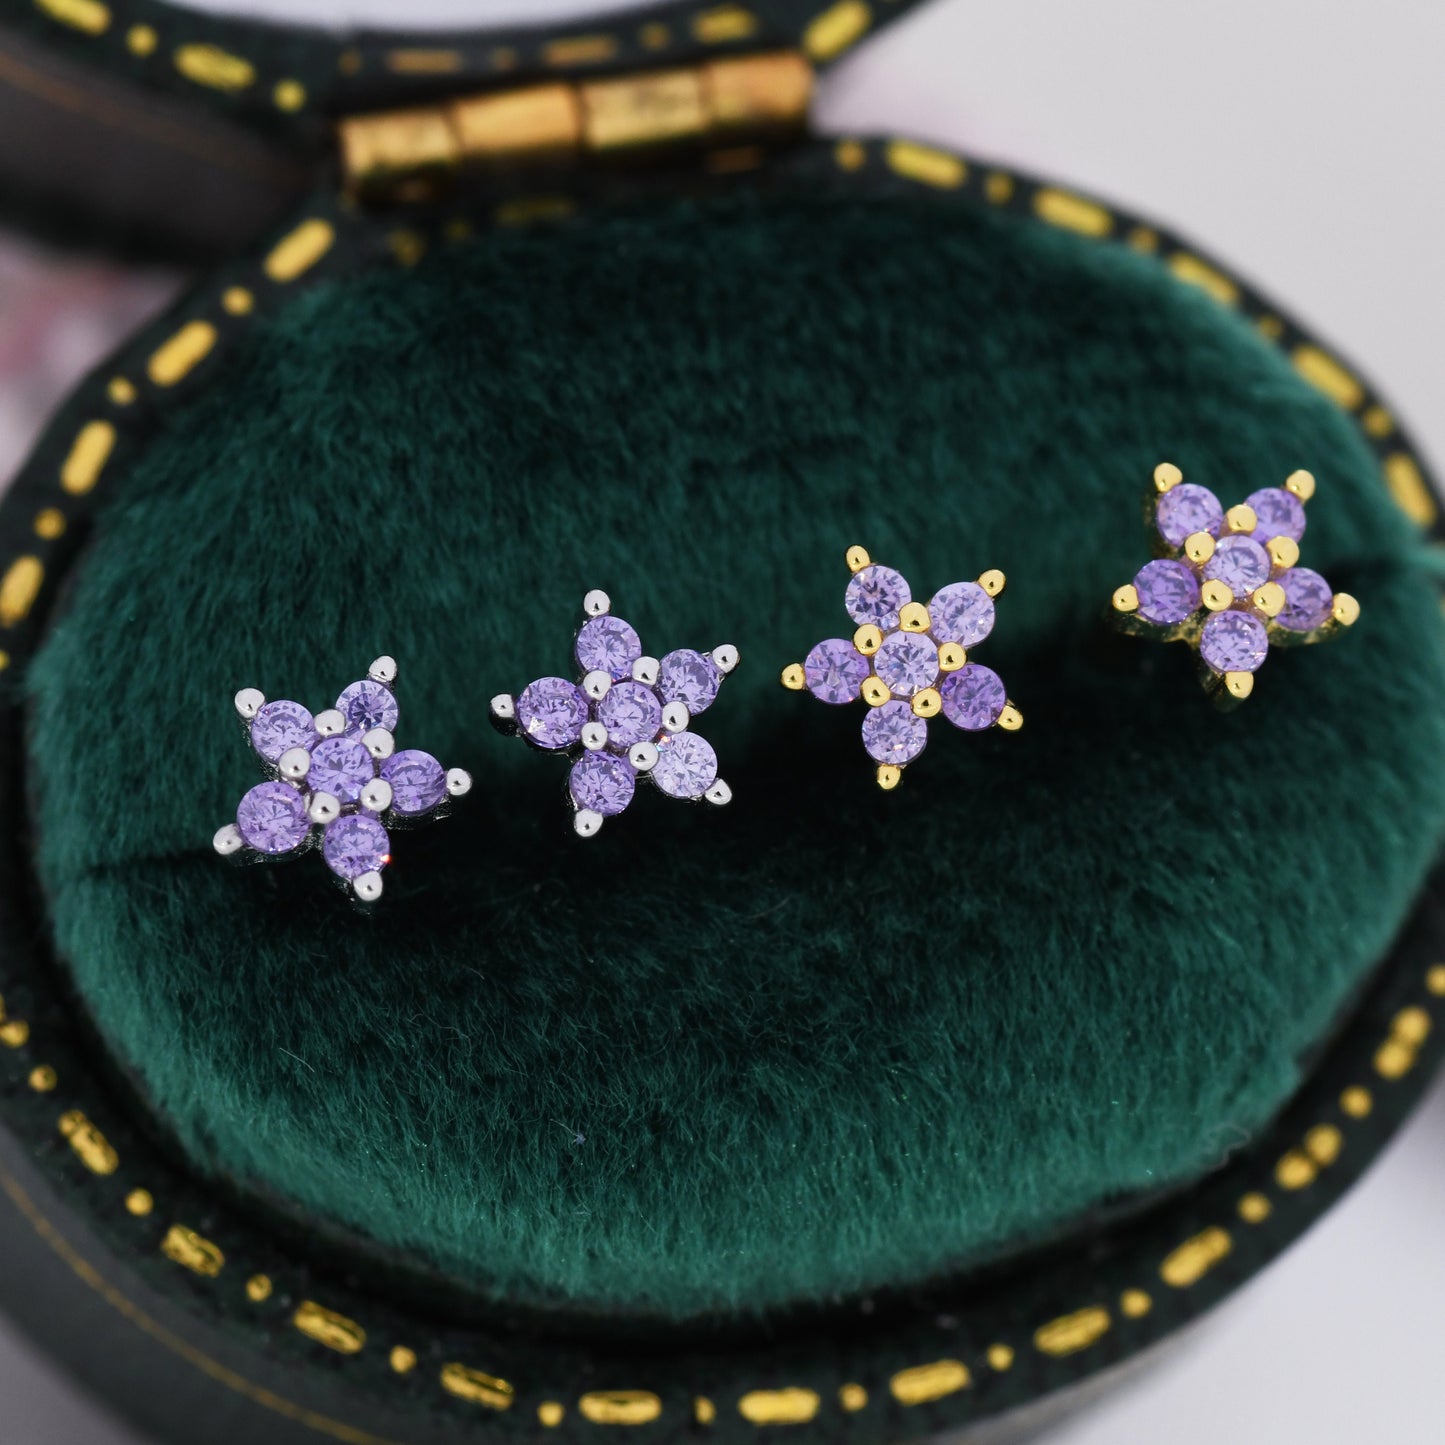 Tiny Lilac Purple CZ Flower Stud Earrings in Sterling Silver, Silver or Gold, Amethyst Crystal Flower Earrings, Stacking Earrings